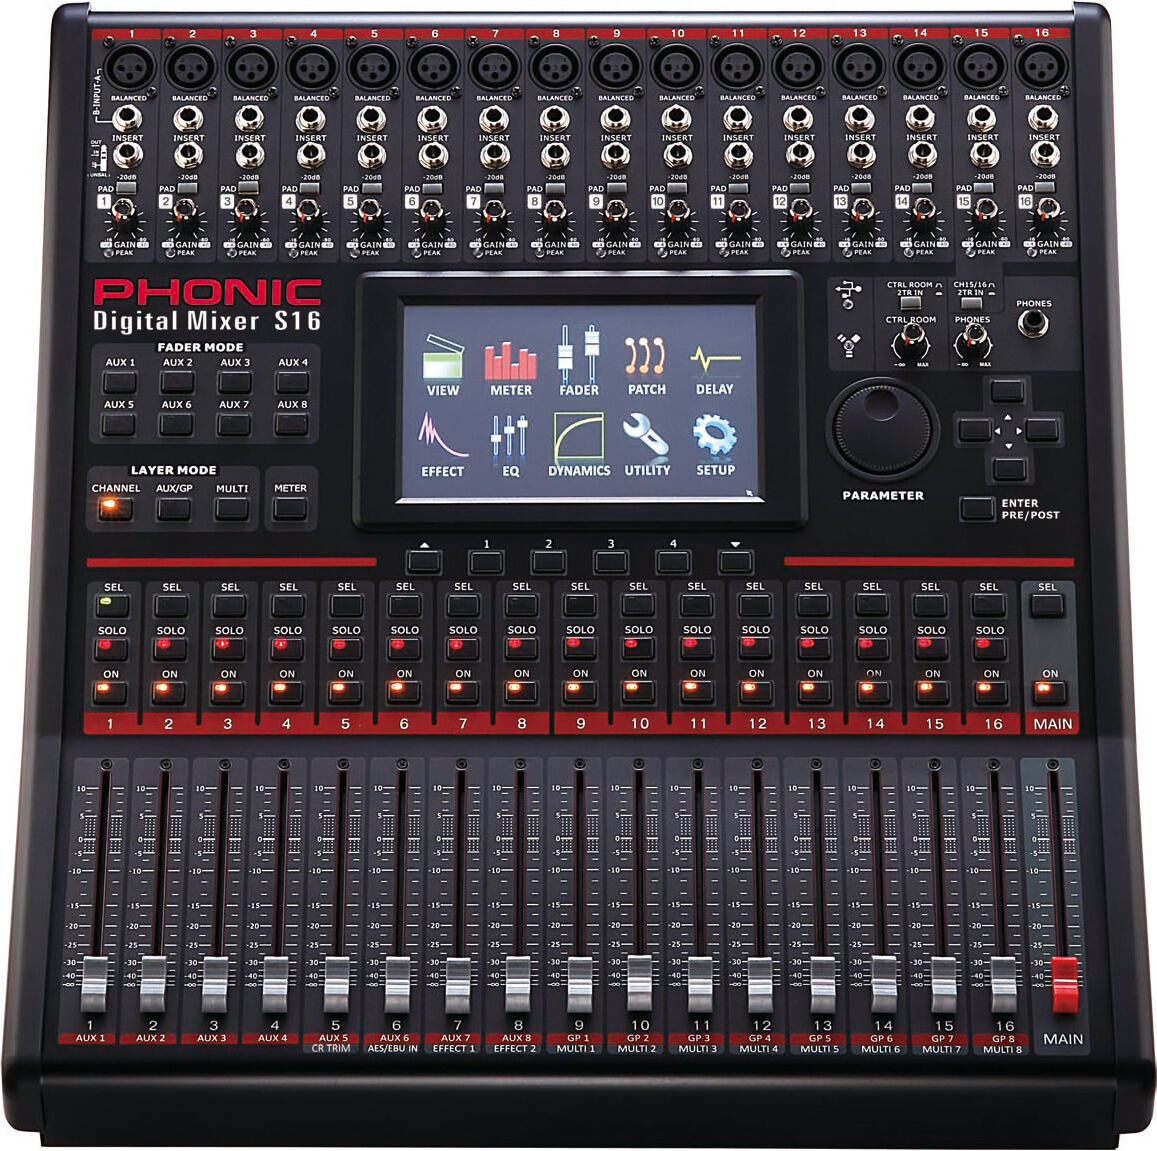 Soundcraft Signature 12 MTK - Table de mixage compacte · Audio Pro